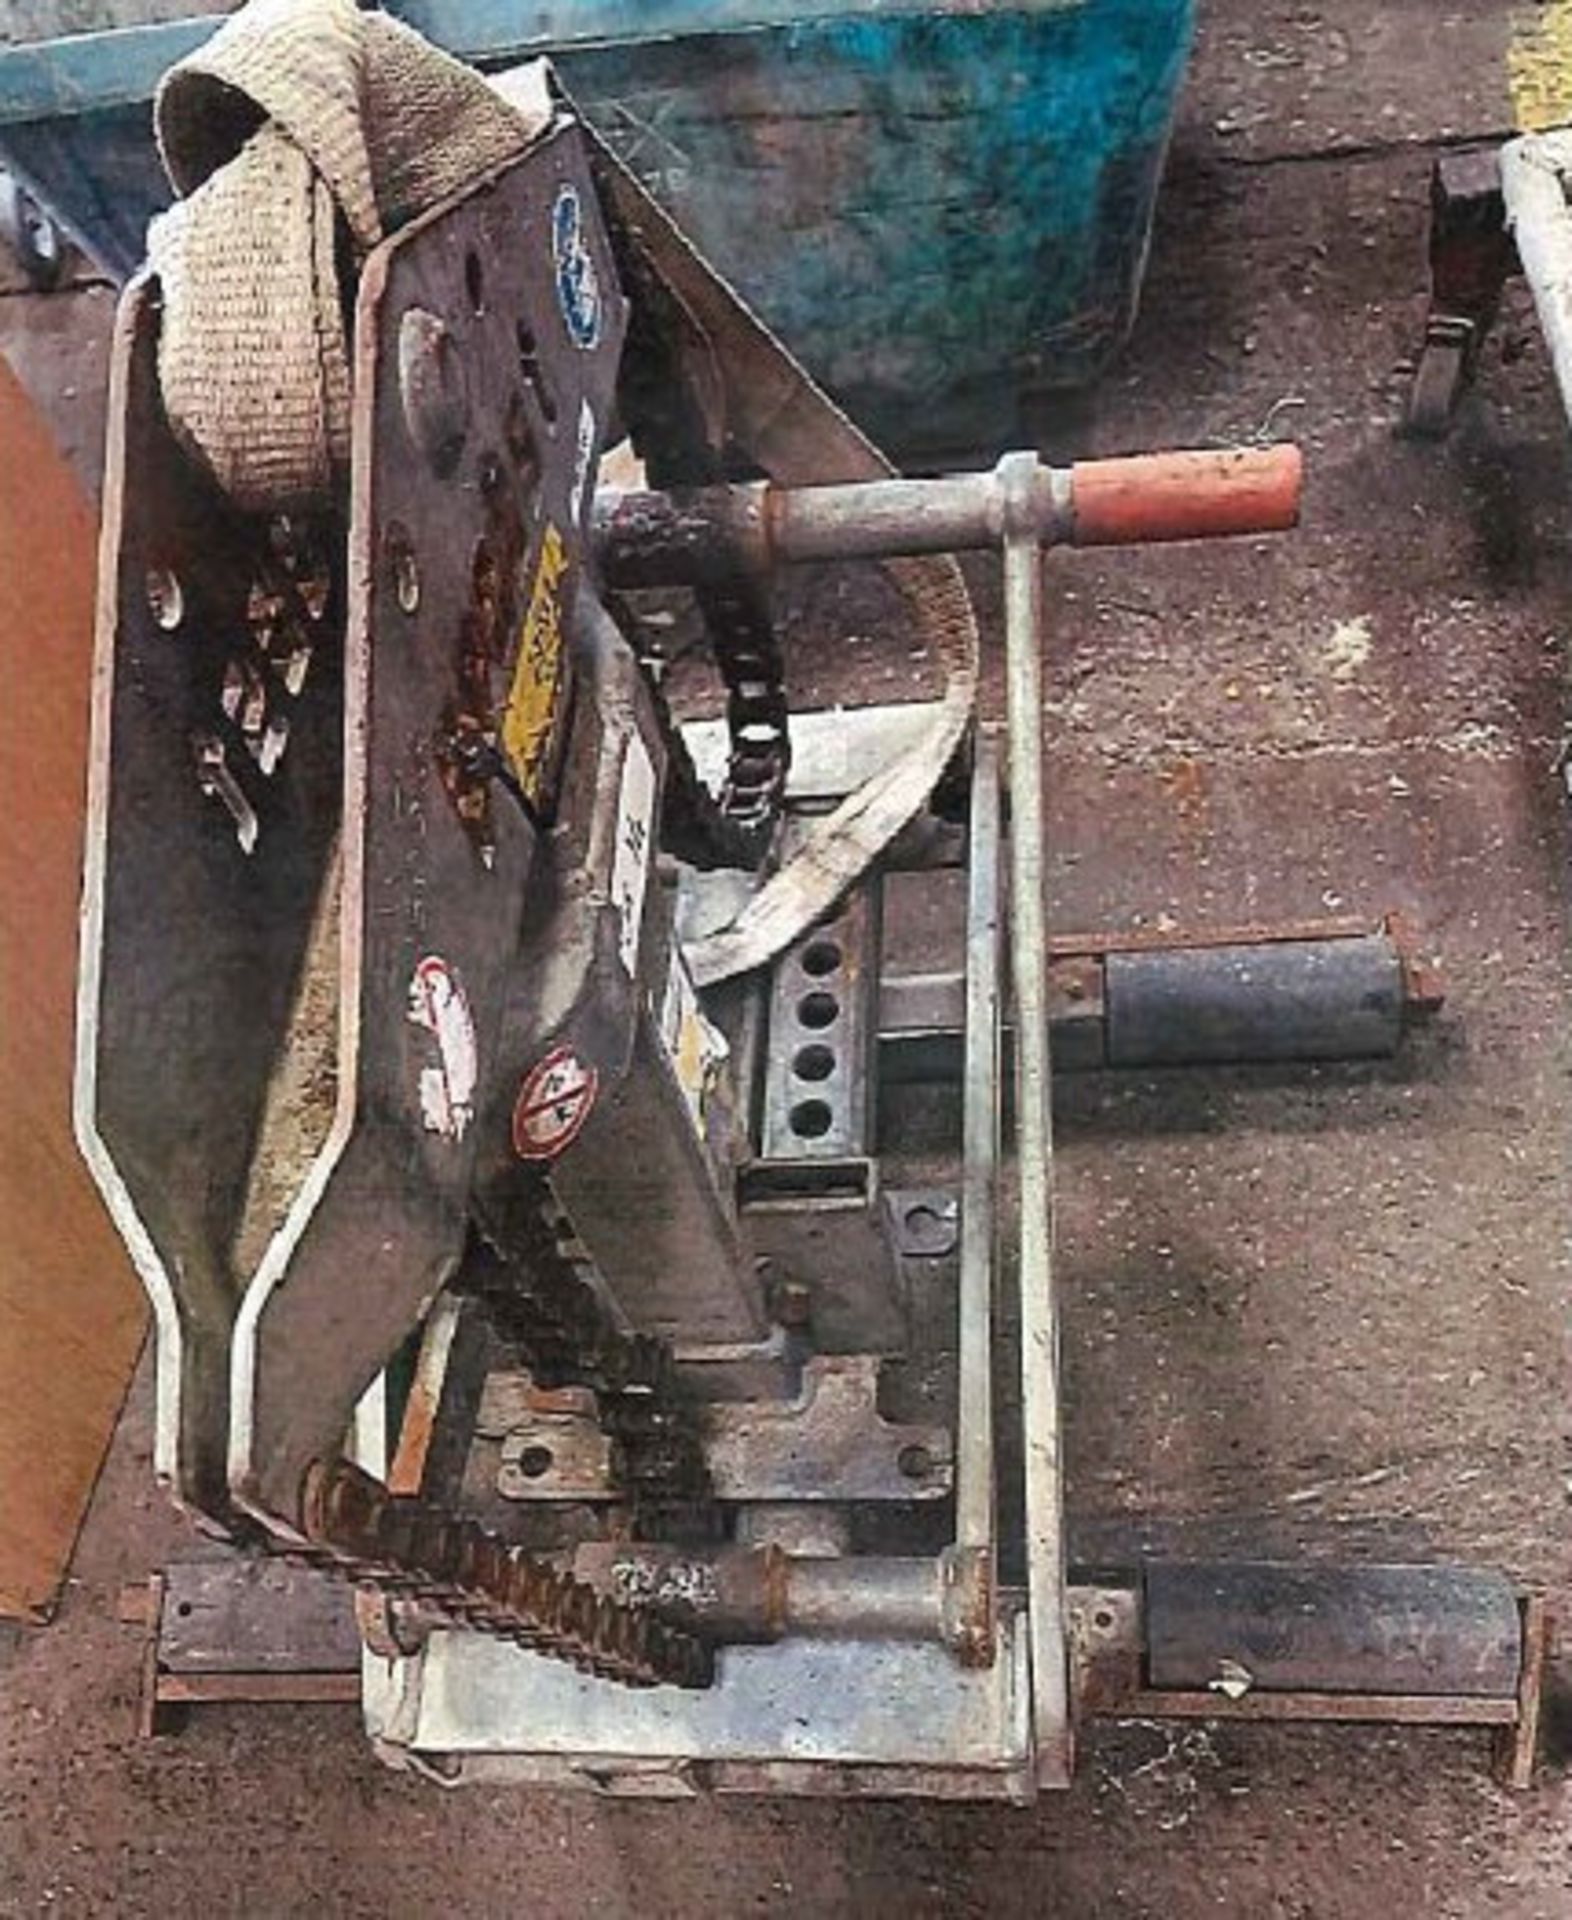 Scissor Lift For Forklift - Max Load 1500 Kg - Ref: 2 - CL464 - Location: Liverpool L19 - Image 2 of 3